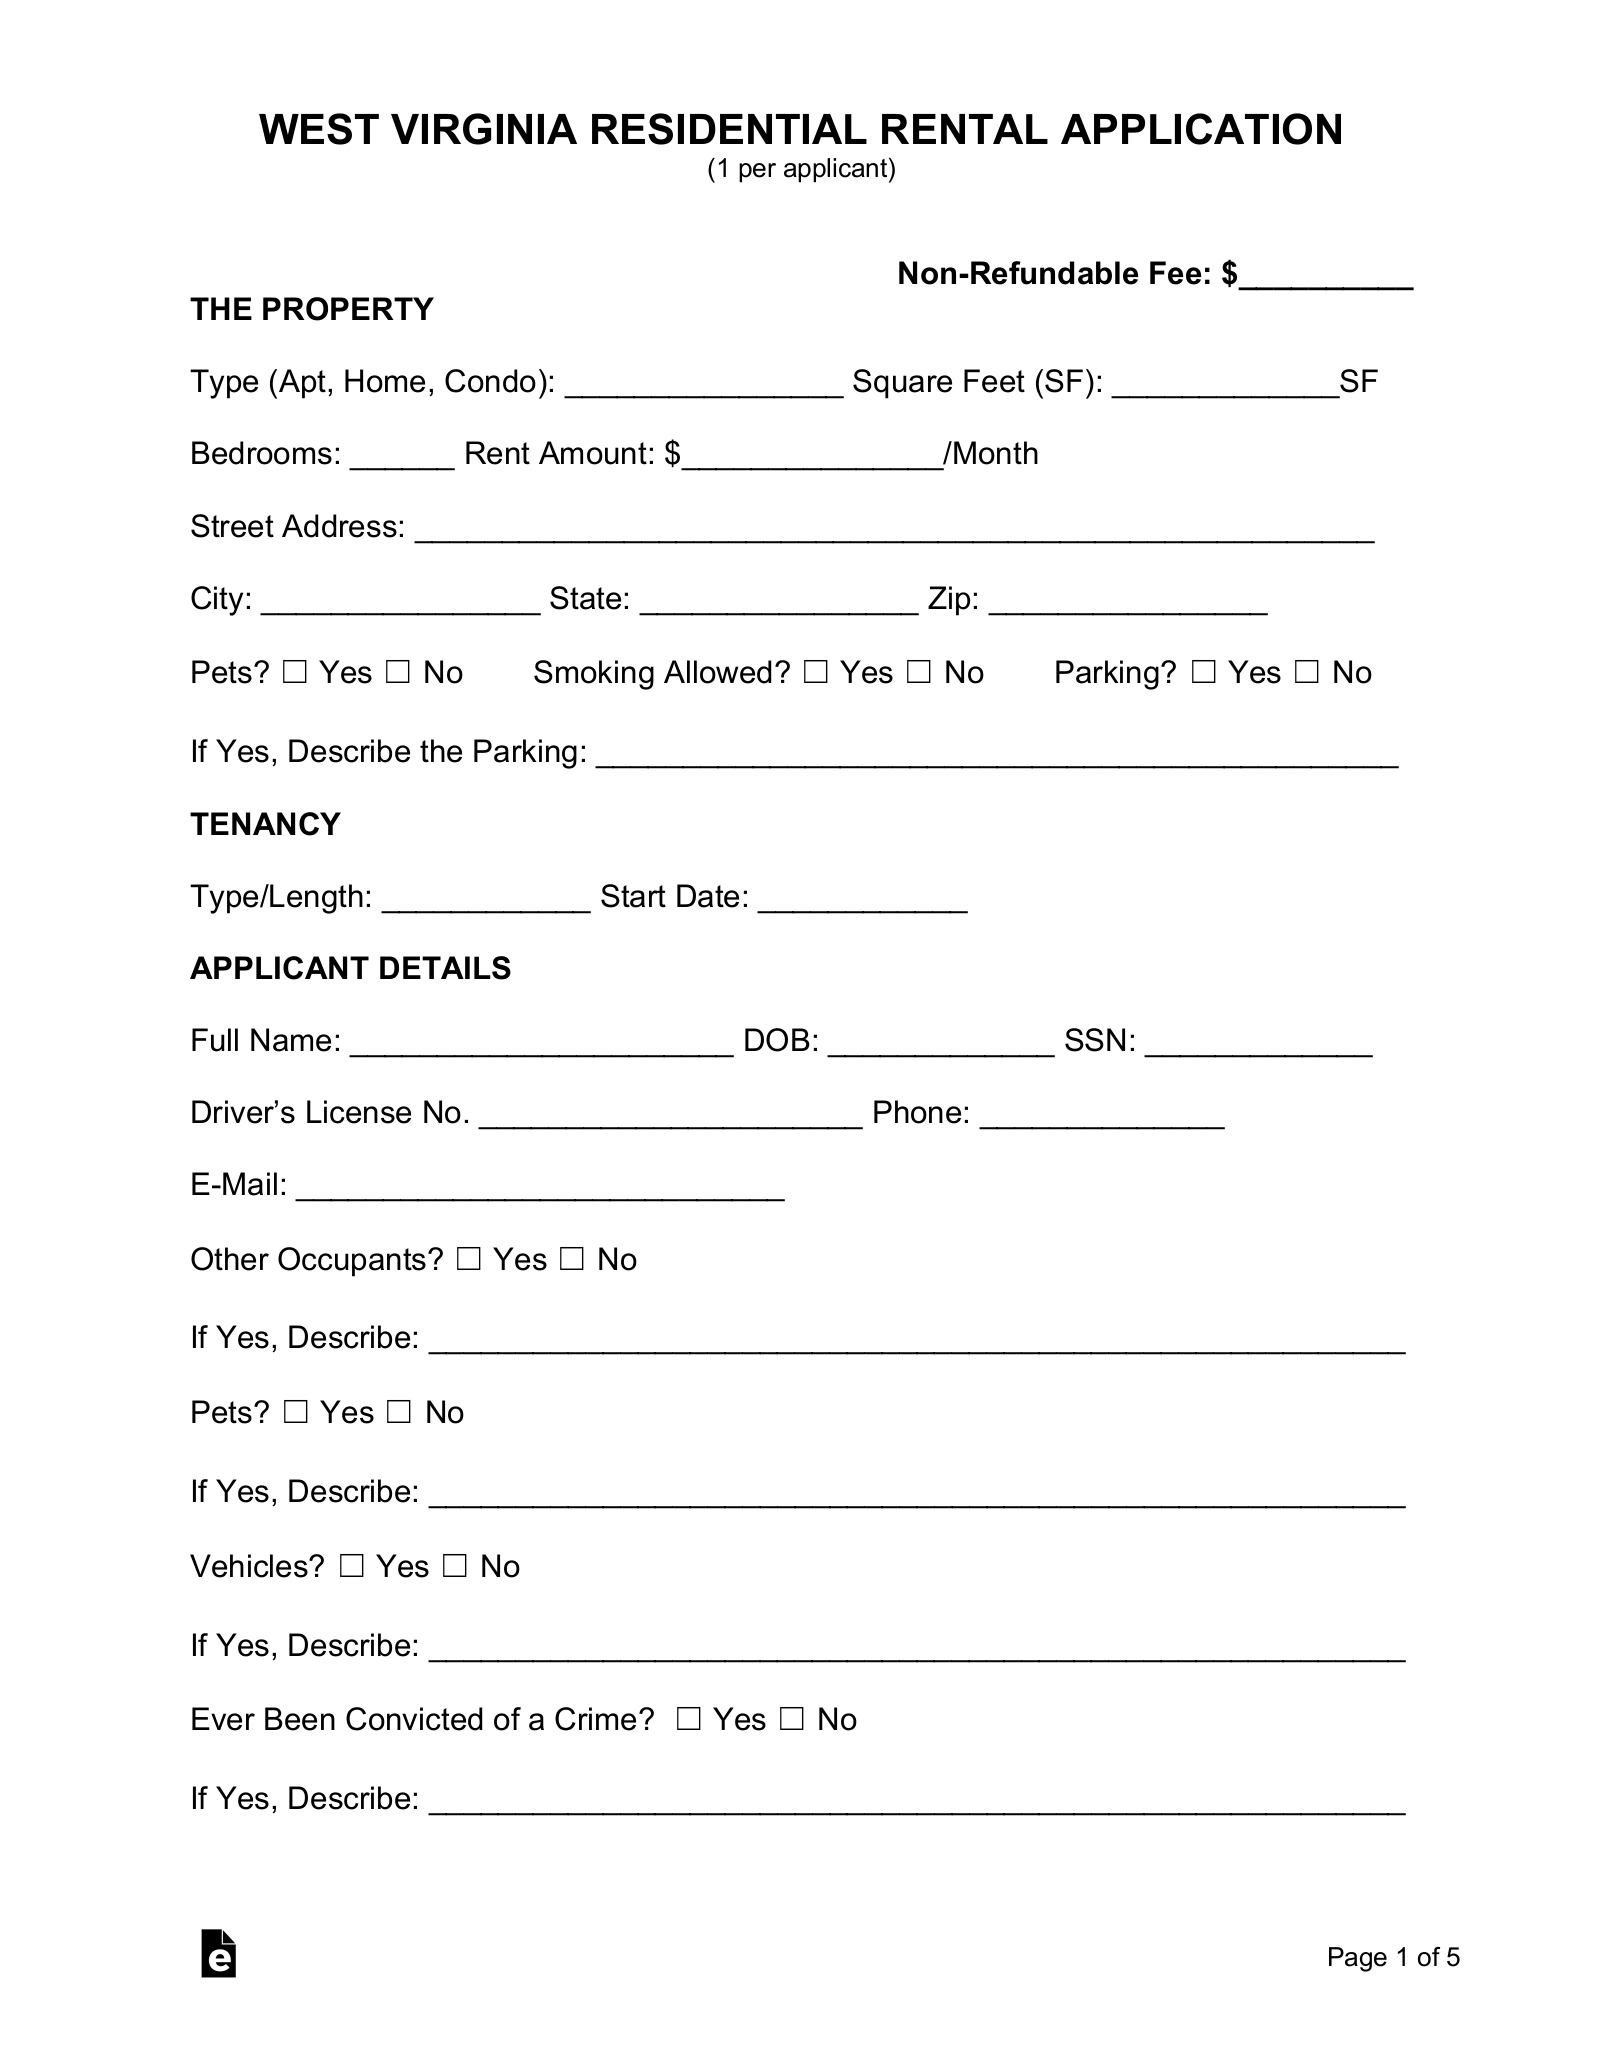 West Virginia Rental Application Form